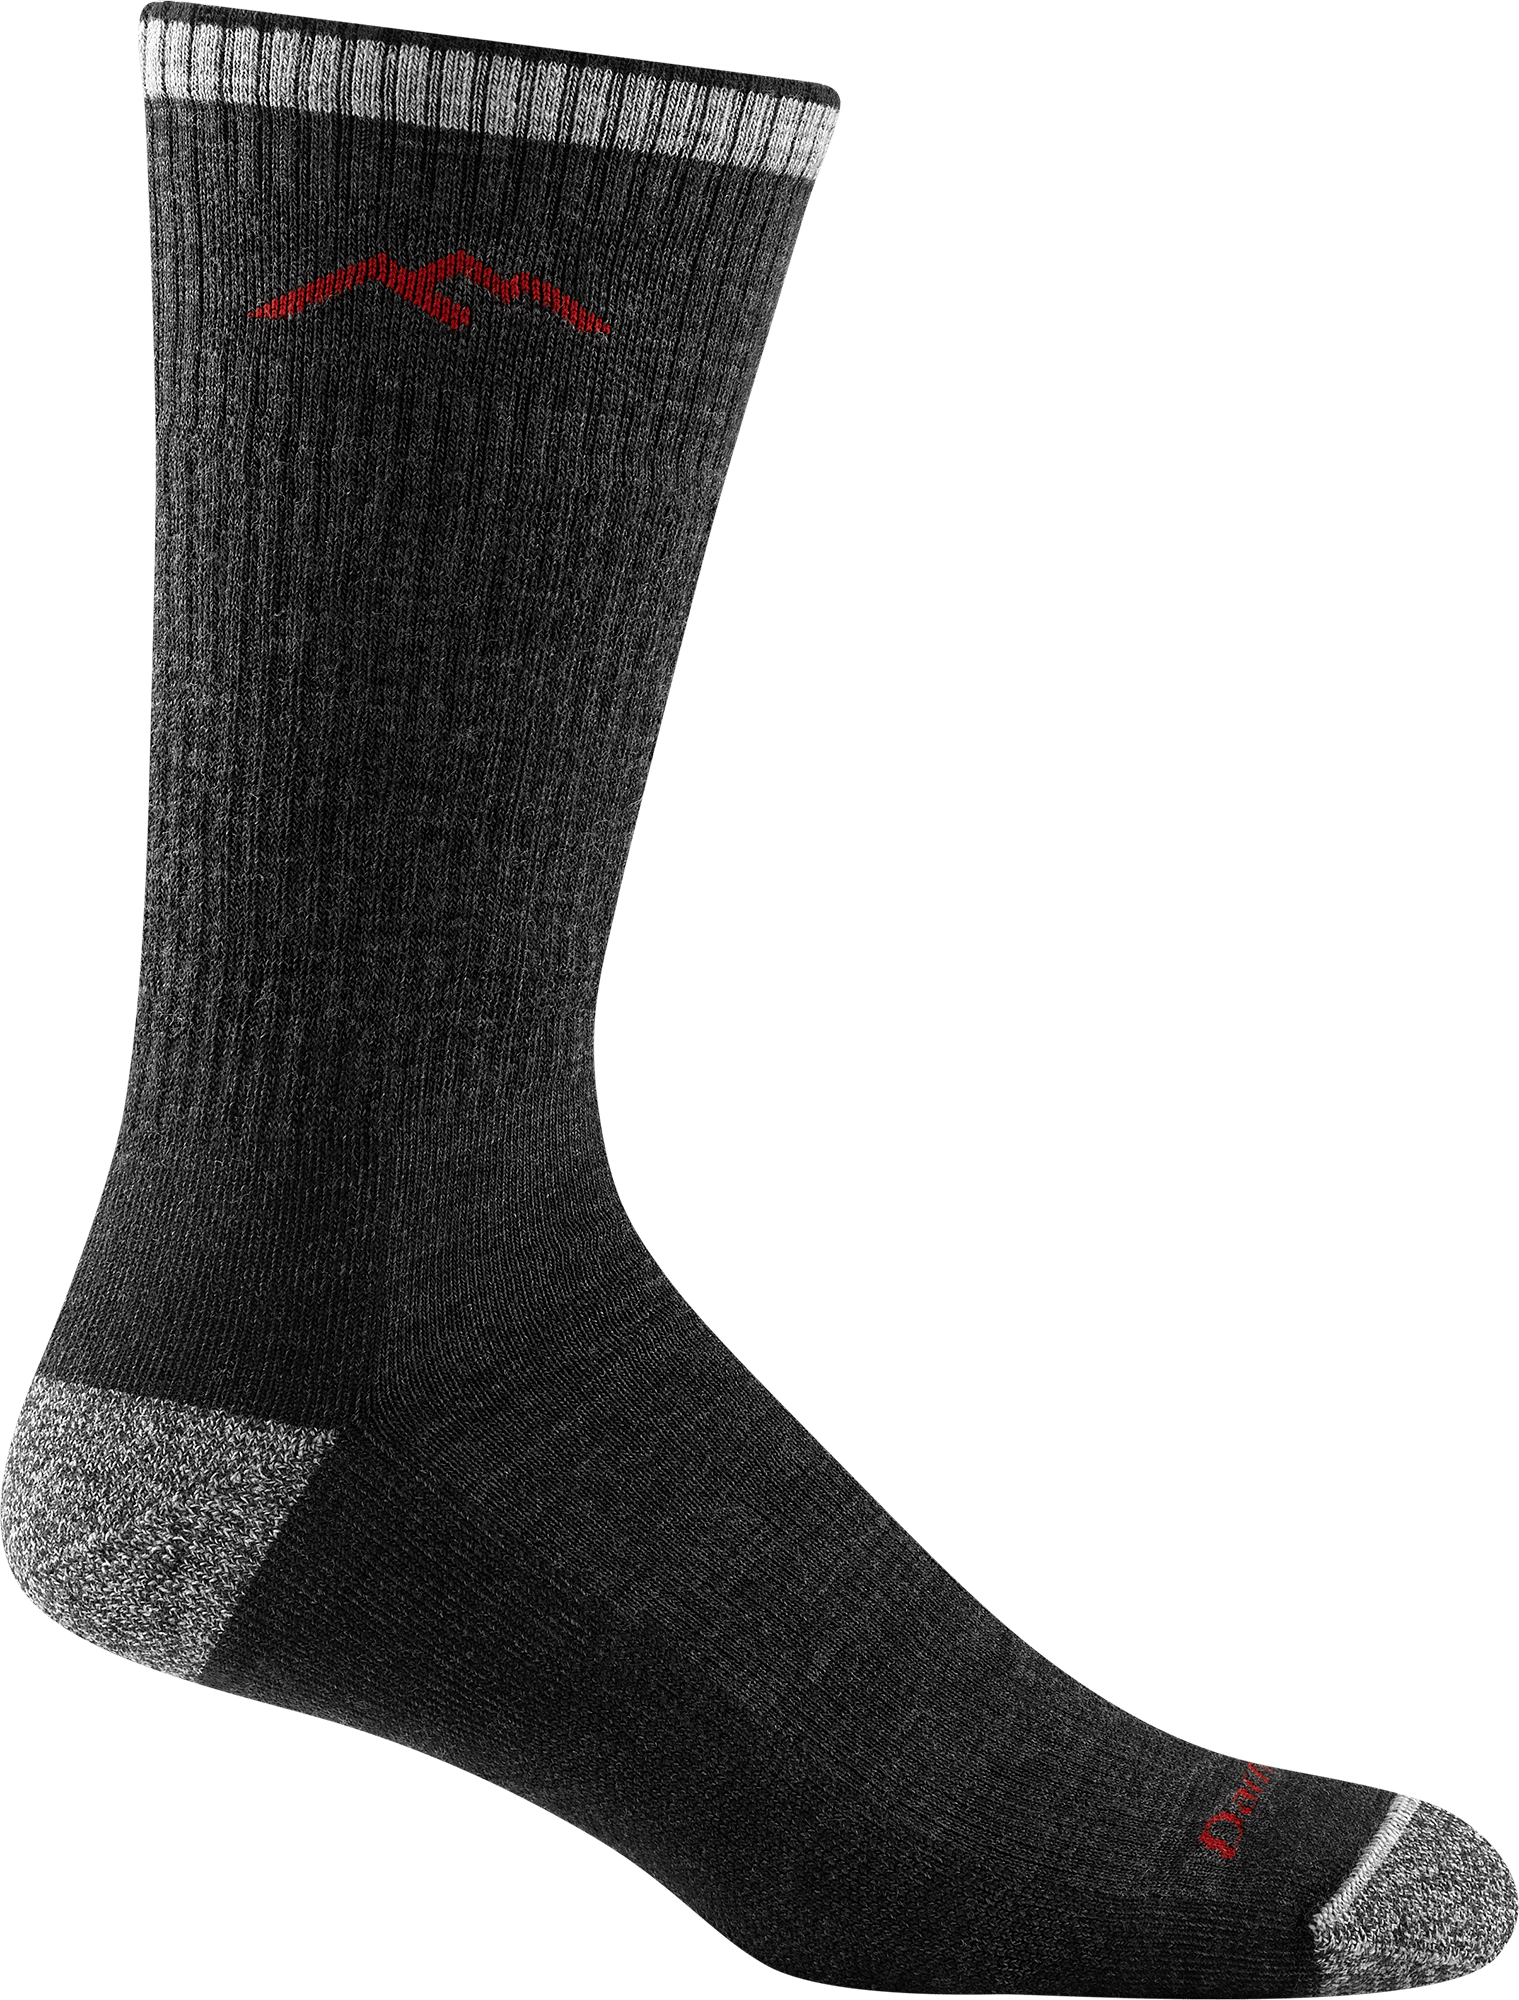 Men's Hiker Boot Sock Cushion Black